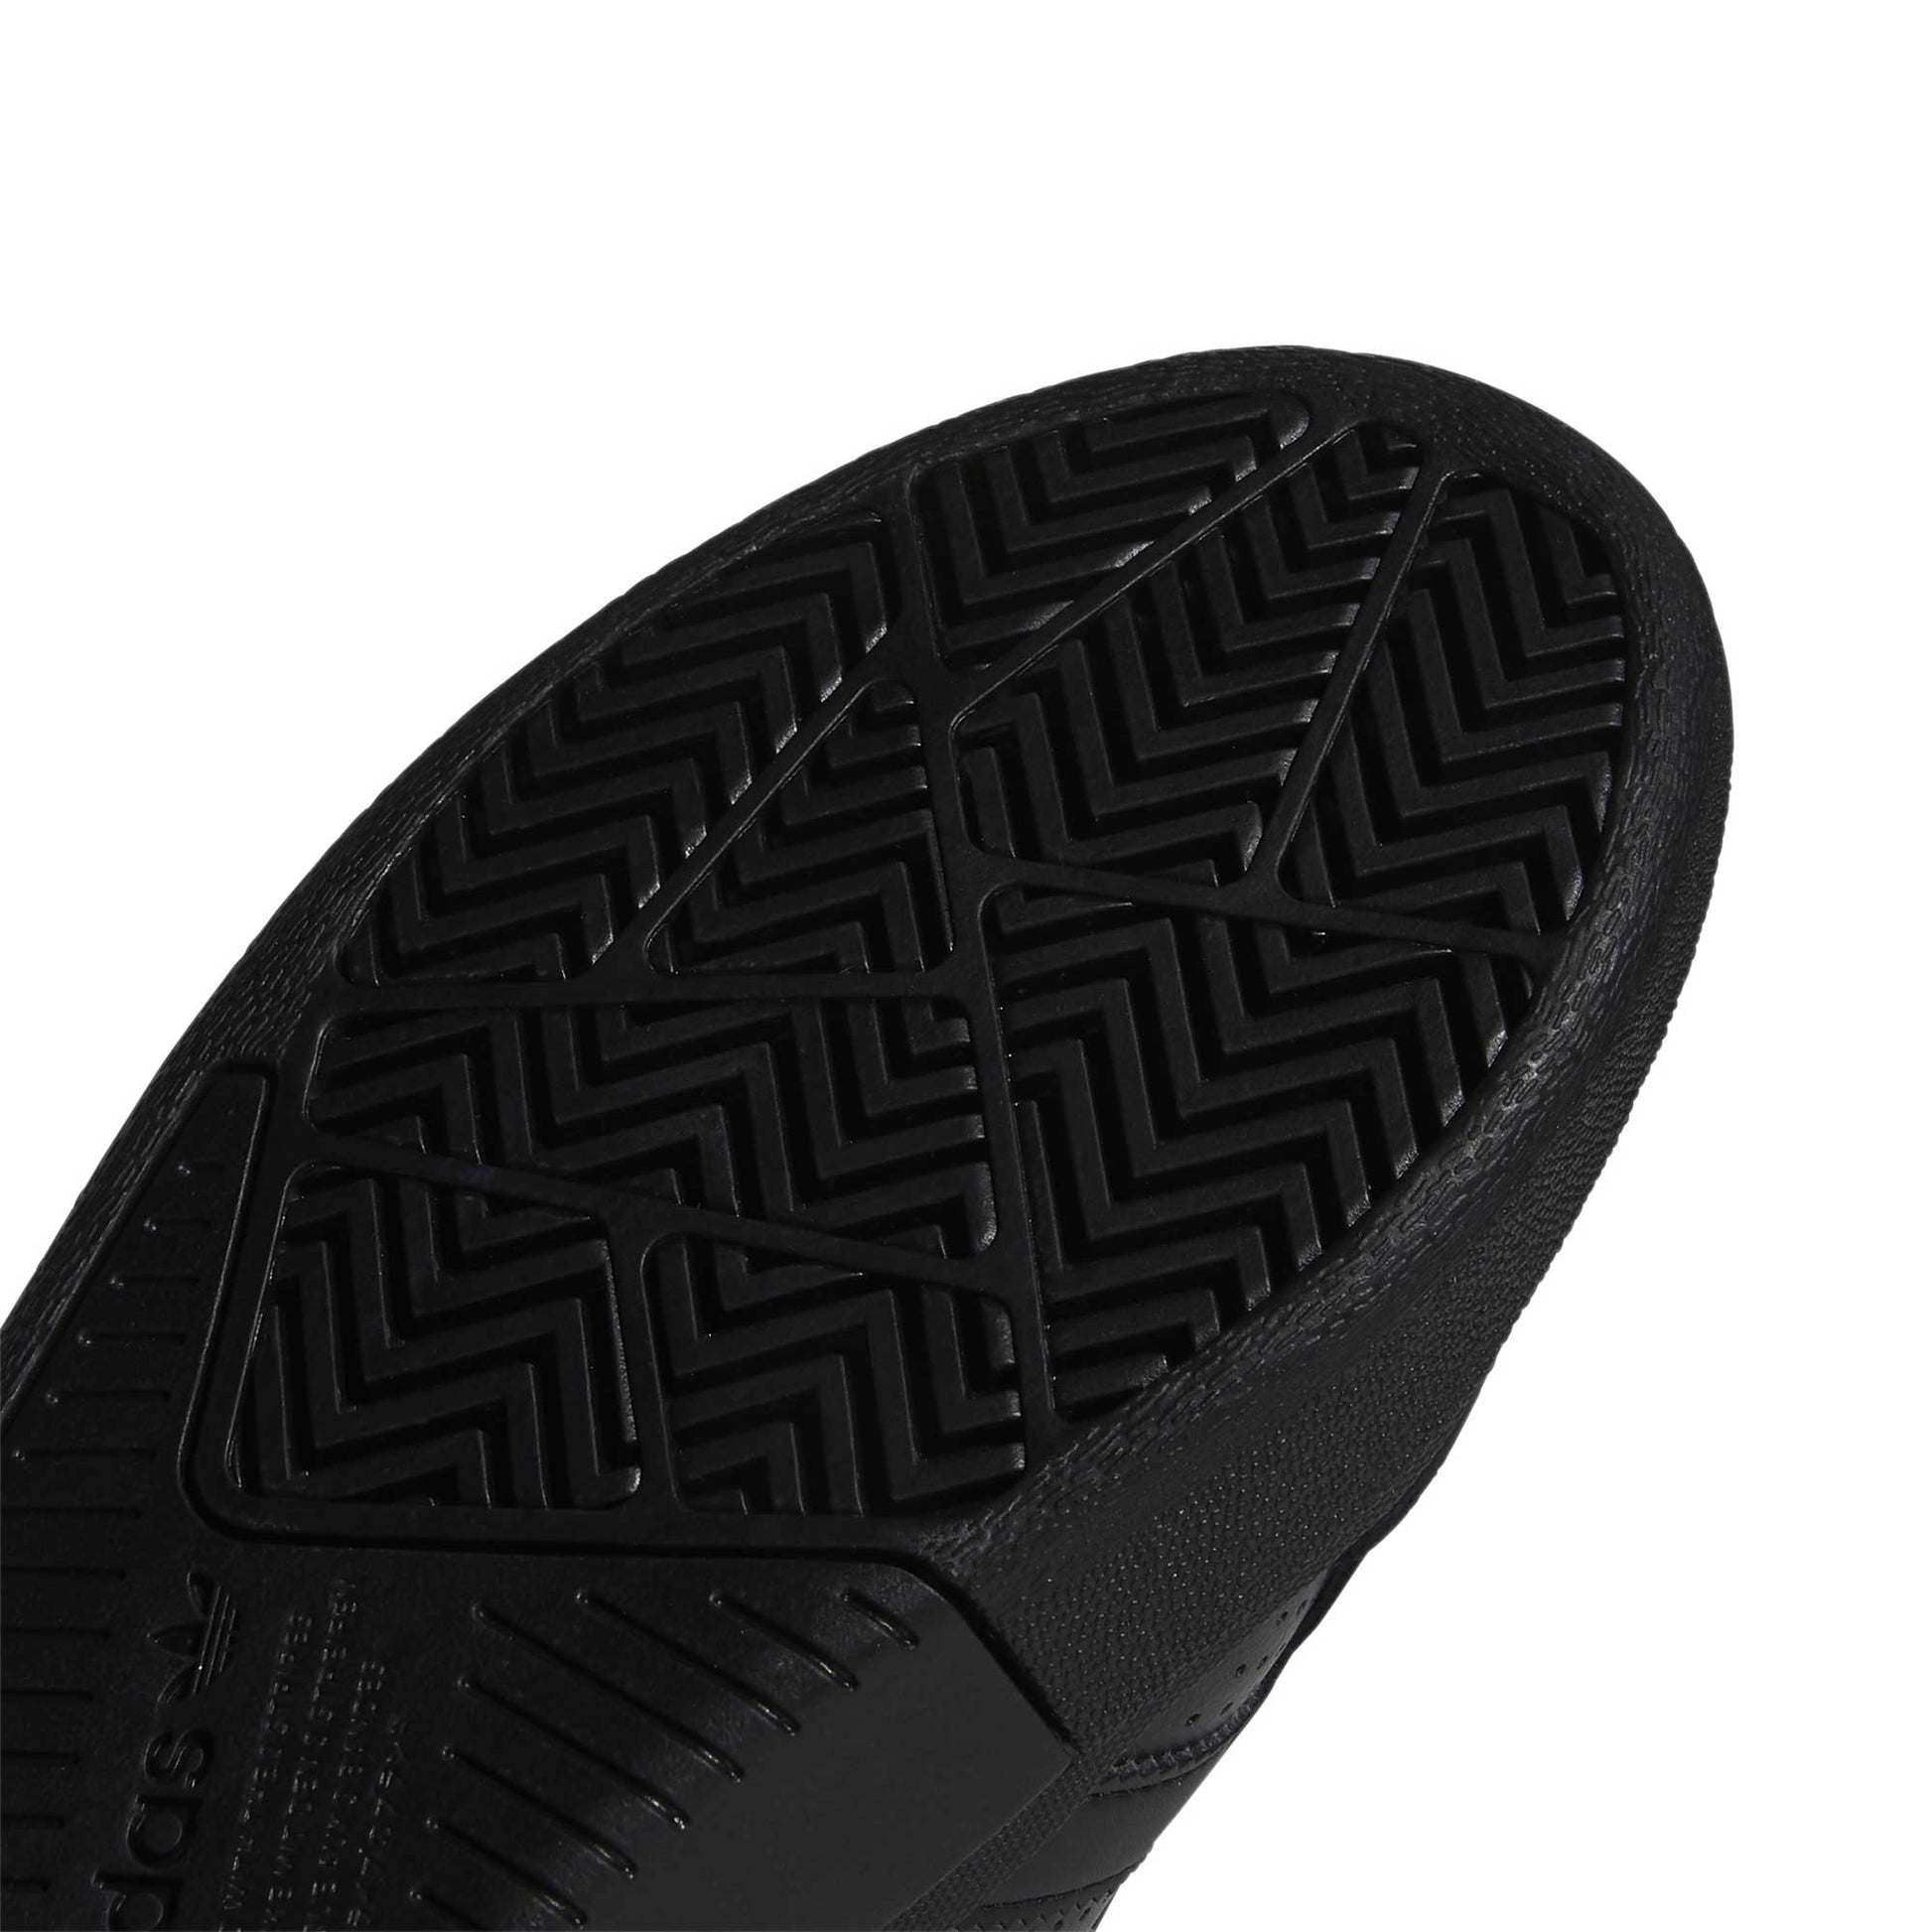 Adidas Tyshawn Low, core black / core black / gold metallic - Tiki Room Skateboards - 8